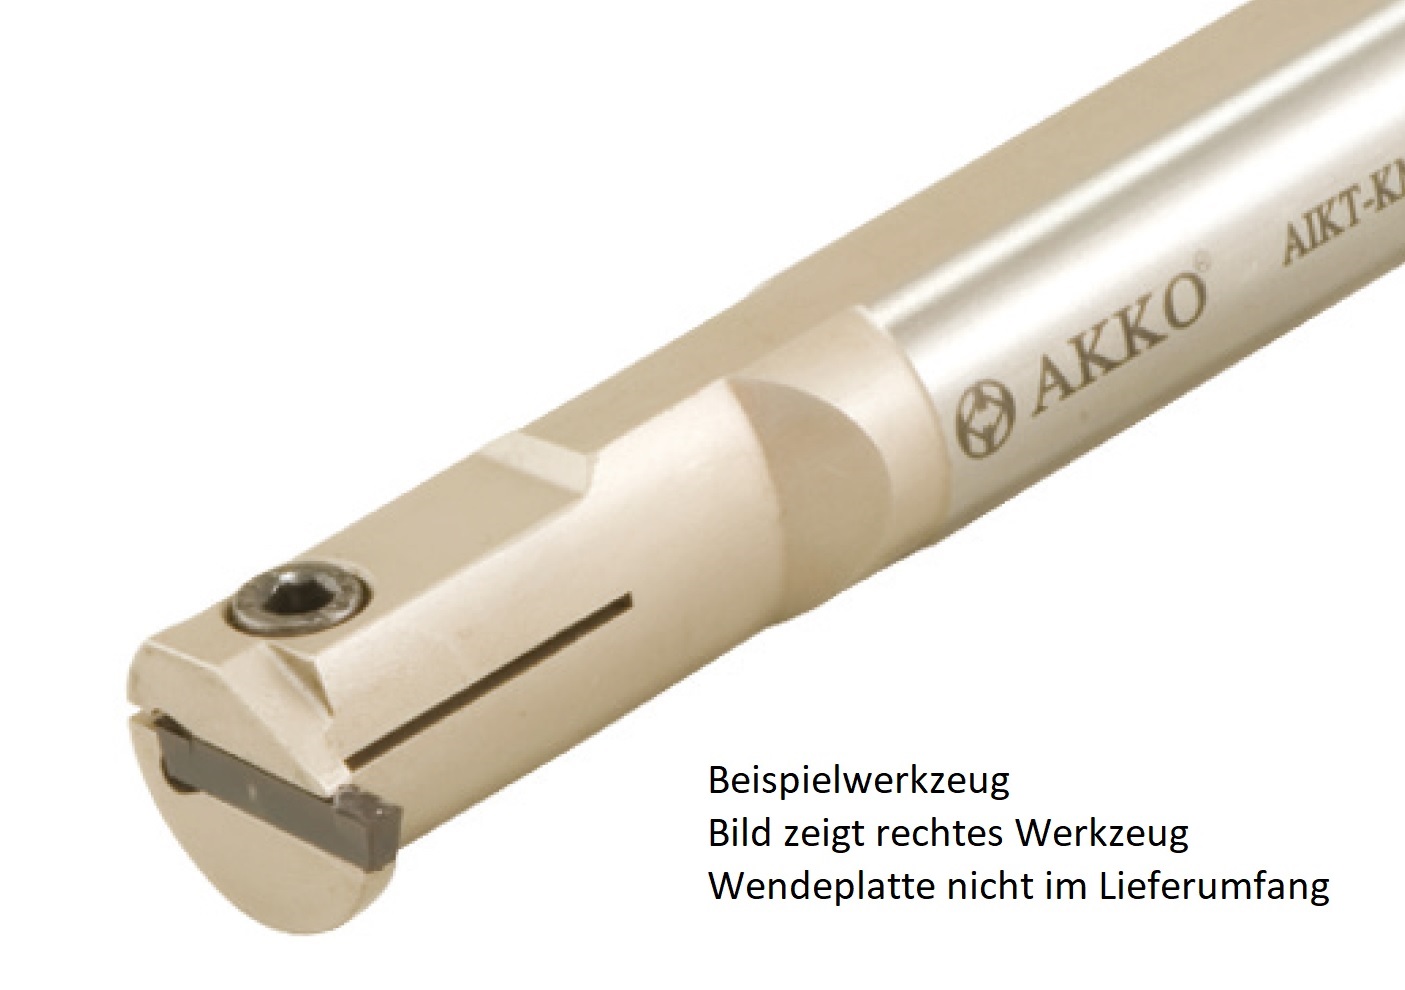 AKKO-Innen-Stechhalter, kompatibel mit Kennametal-Stechplatte A4.-3
Schaft-ø 32, ohne Innenkühlung, links